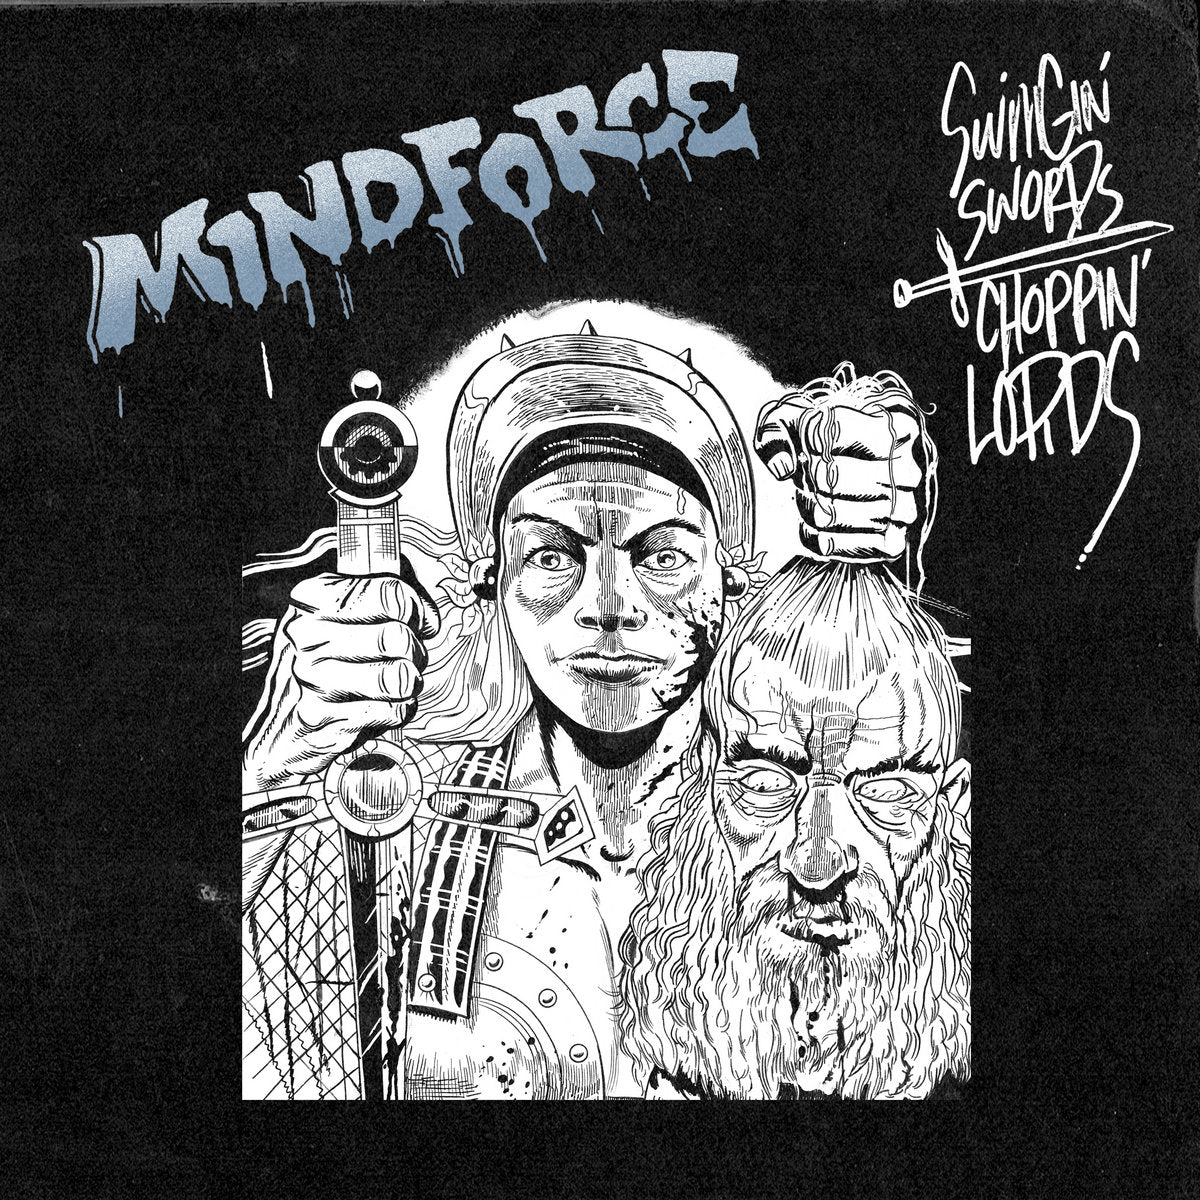 Mindforce - Swingin' Swords Choppin' Lords (Rare)